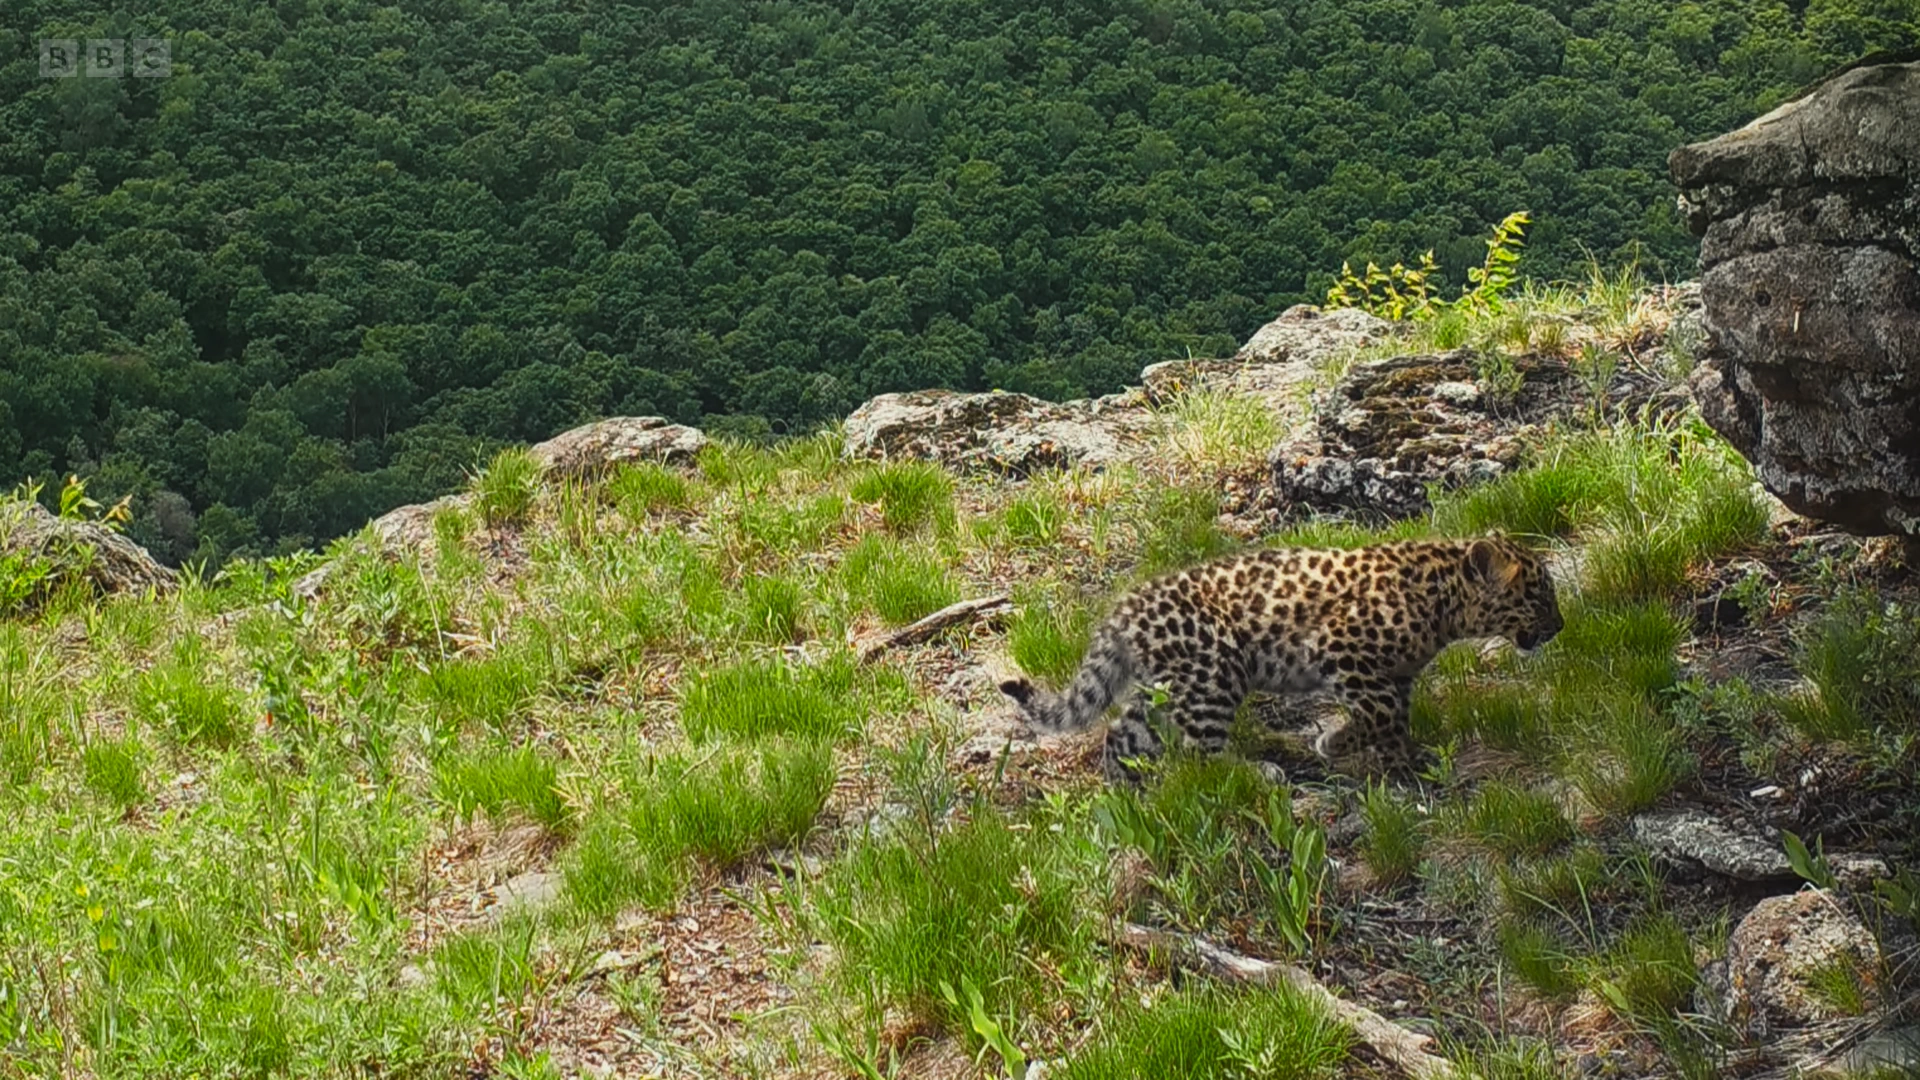 Amur leopard (Panthera pardus orientalis) as shown in Frozen Planet II - Frozen Lands